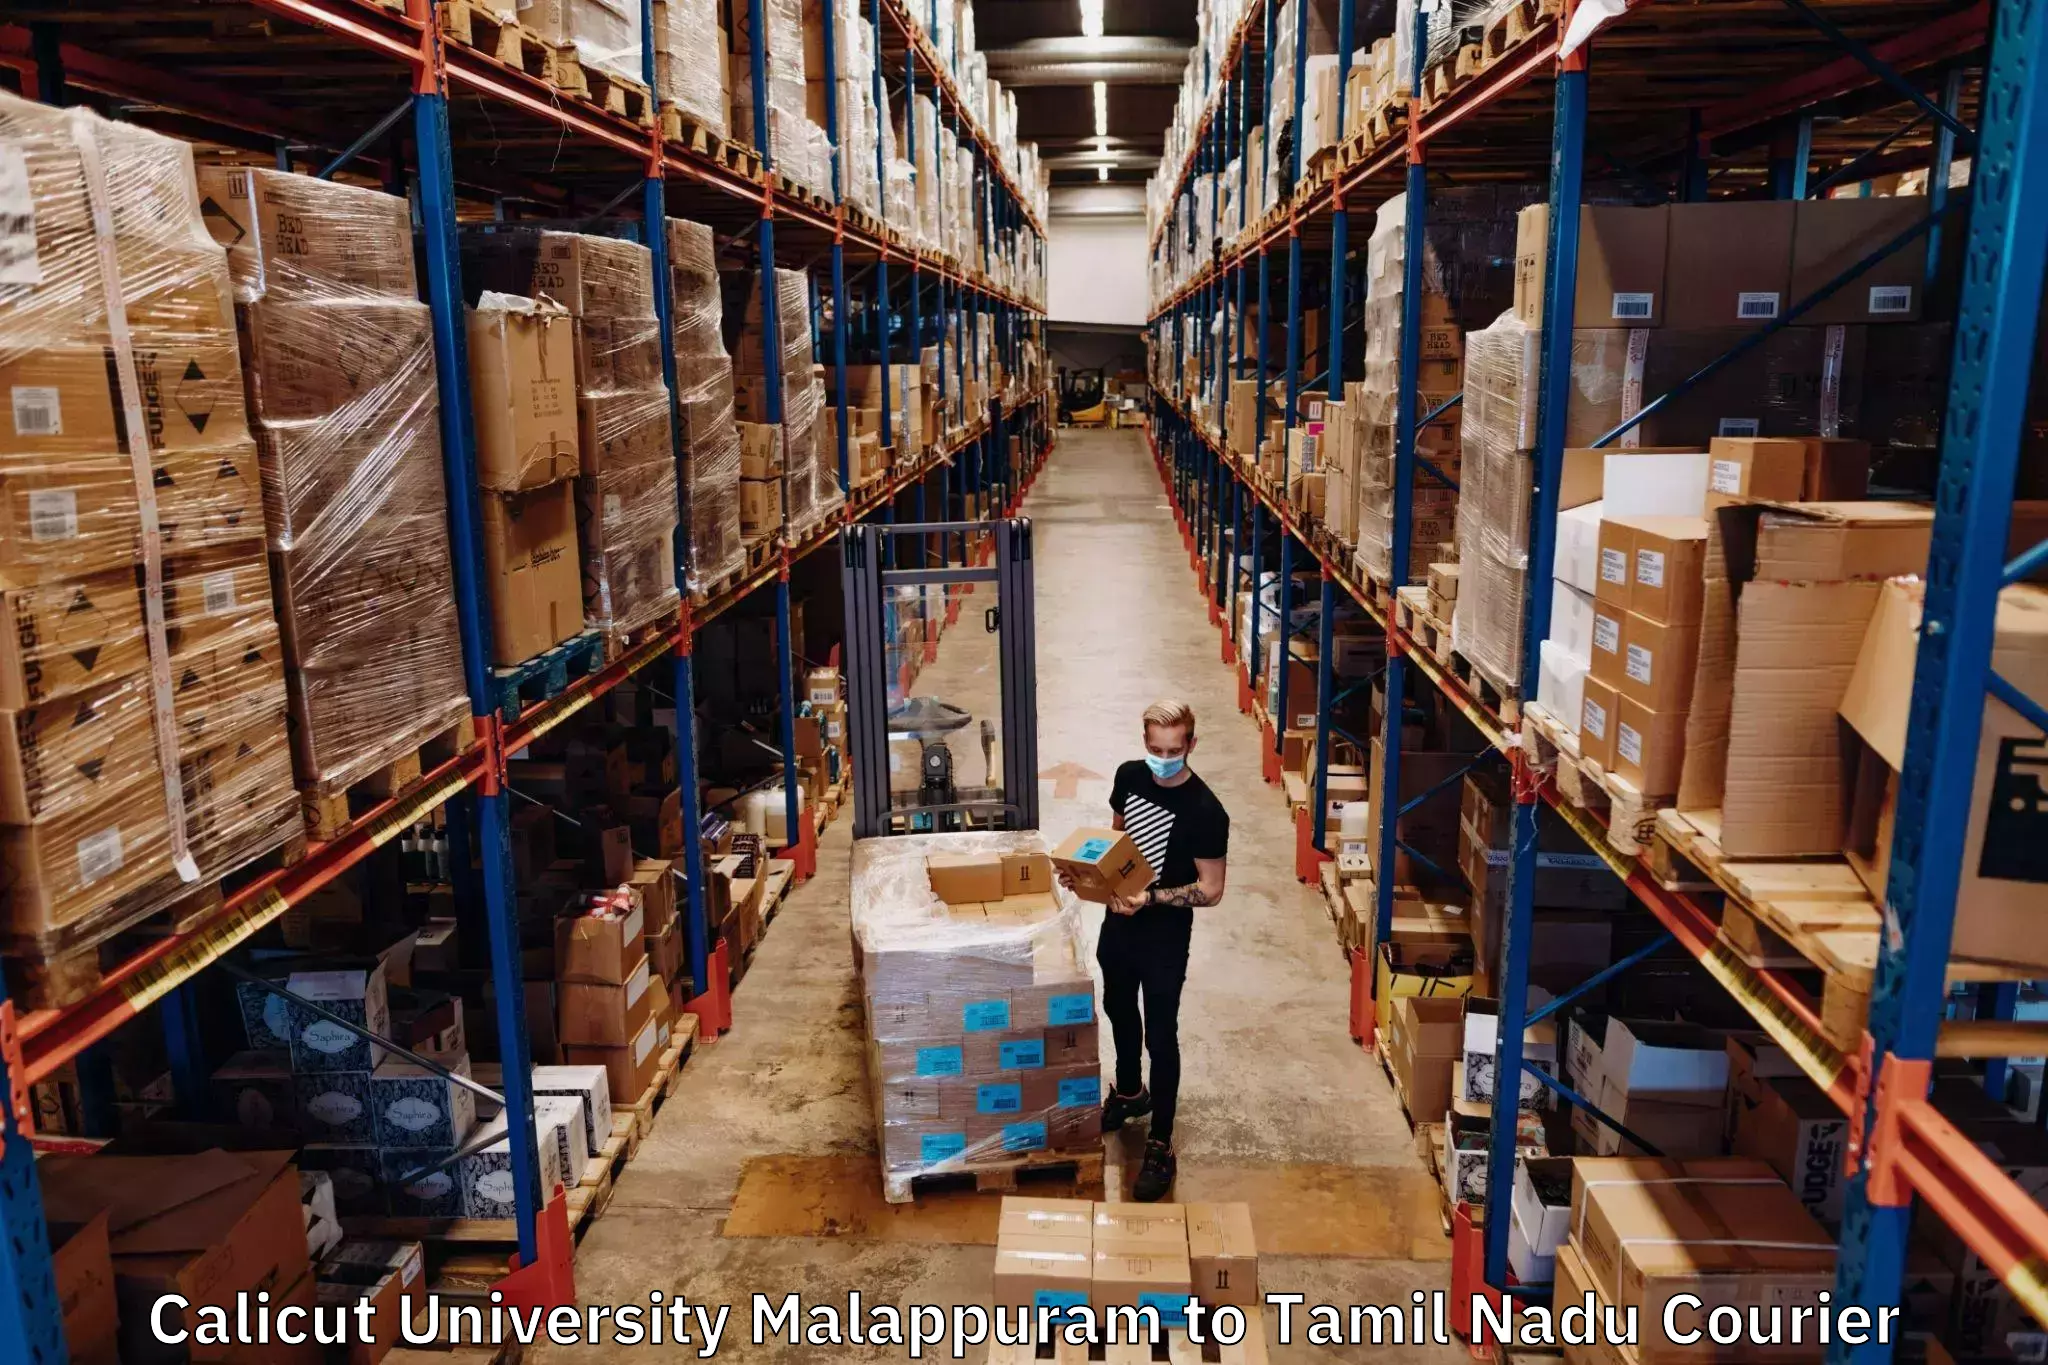 Specialized shipment handling Calicut University Malappuram to Eraiyur